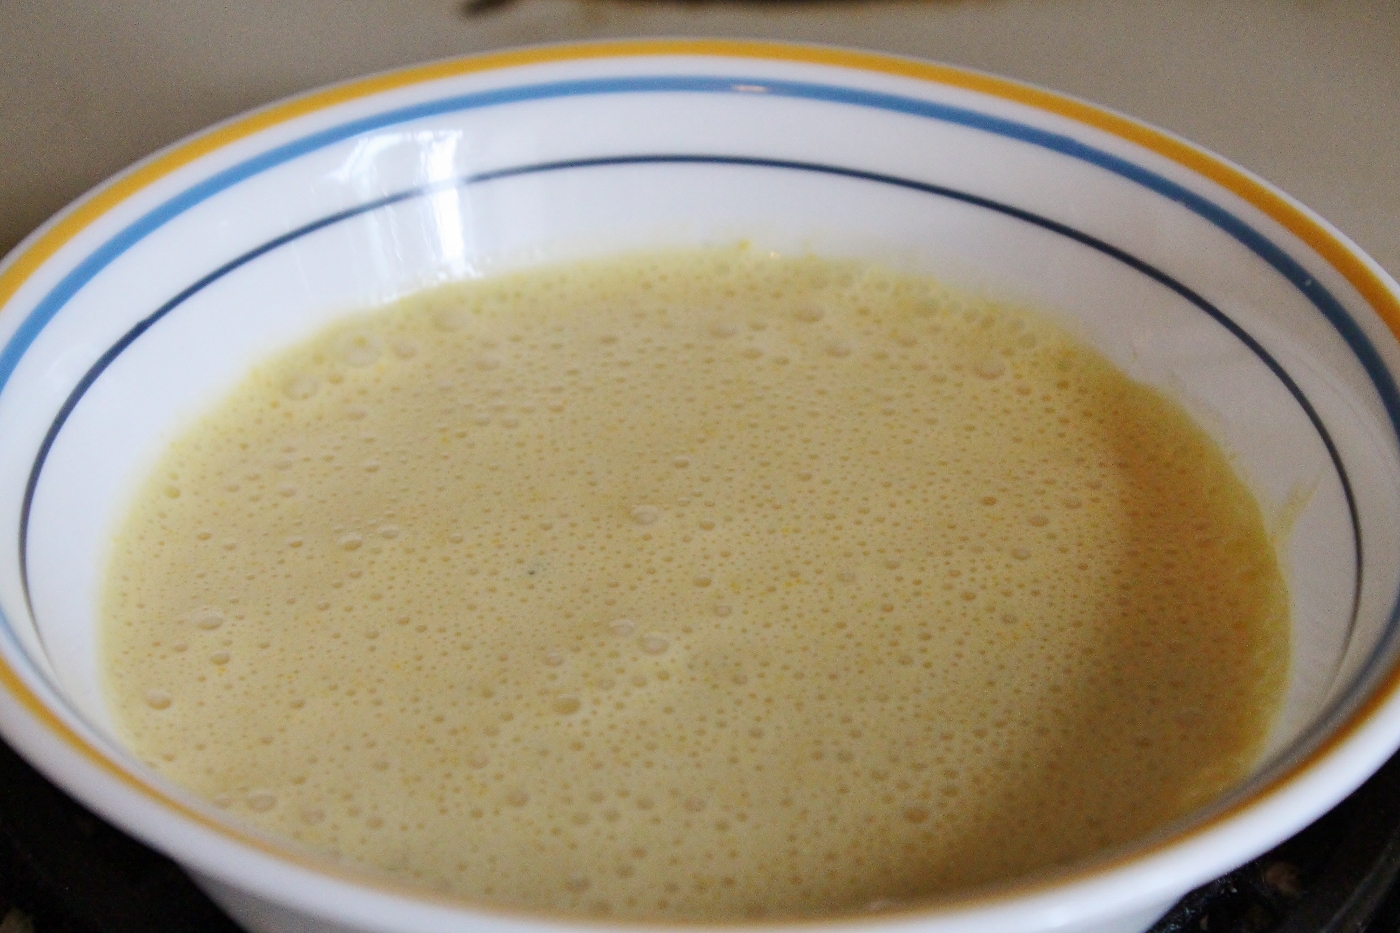 vegg et soymilk lait de soya (1400x933)